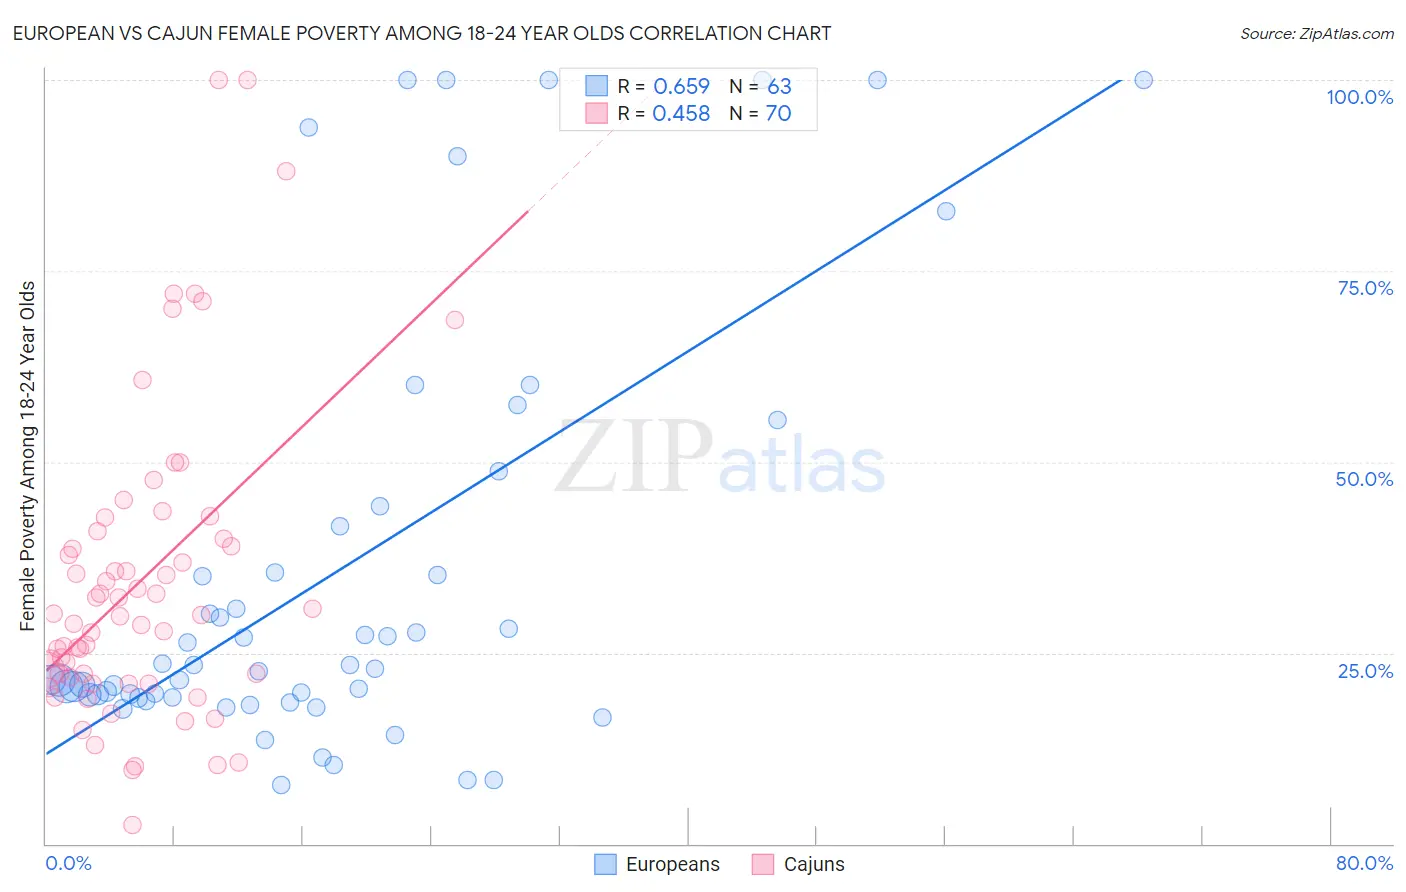 European vs Cajun Female Poverty Among 18-24 Year Olds